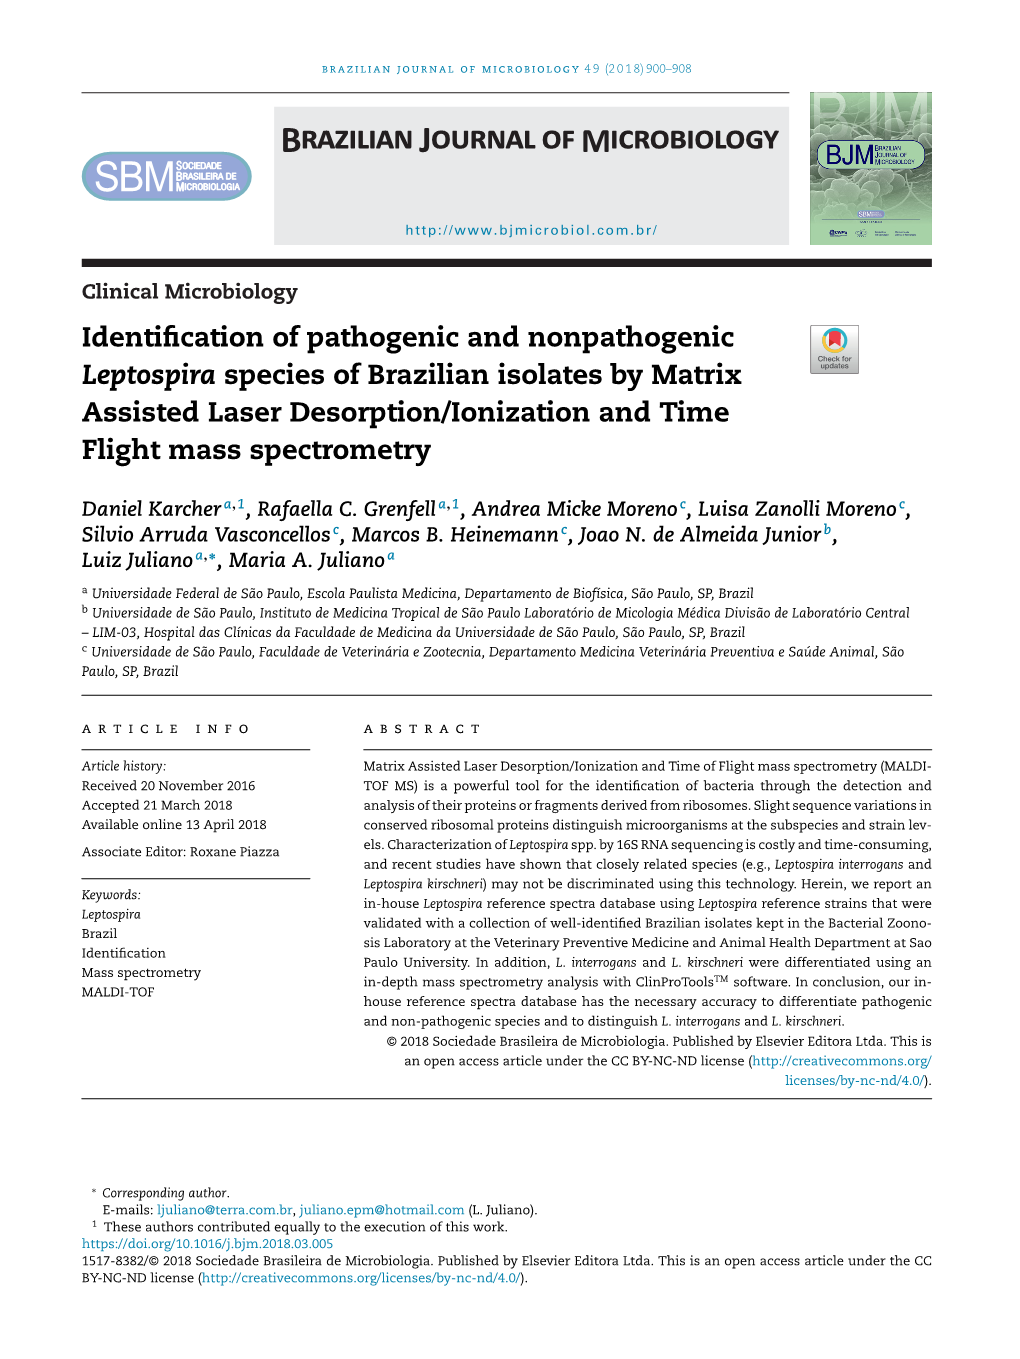 Identification of Pathogenic and Nonpathogenic Leptospira Species